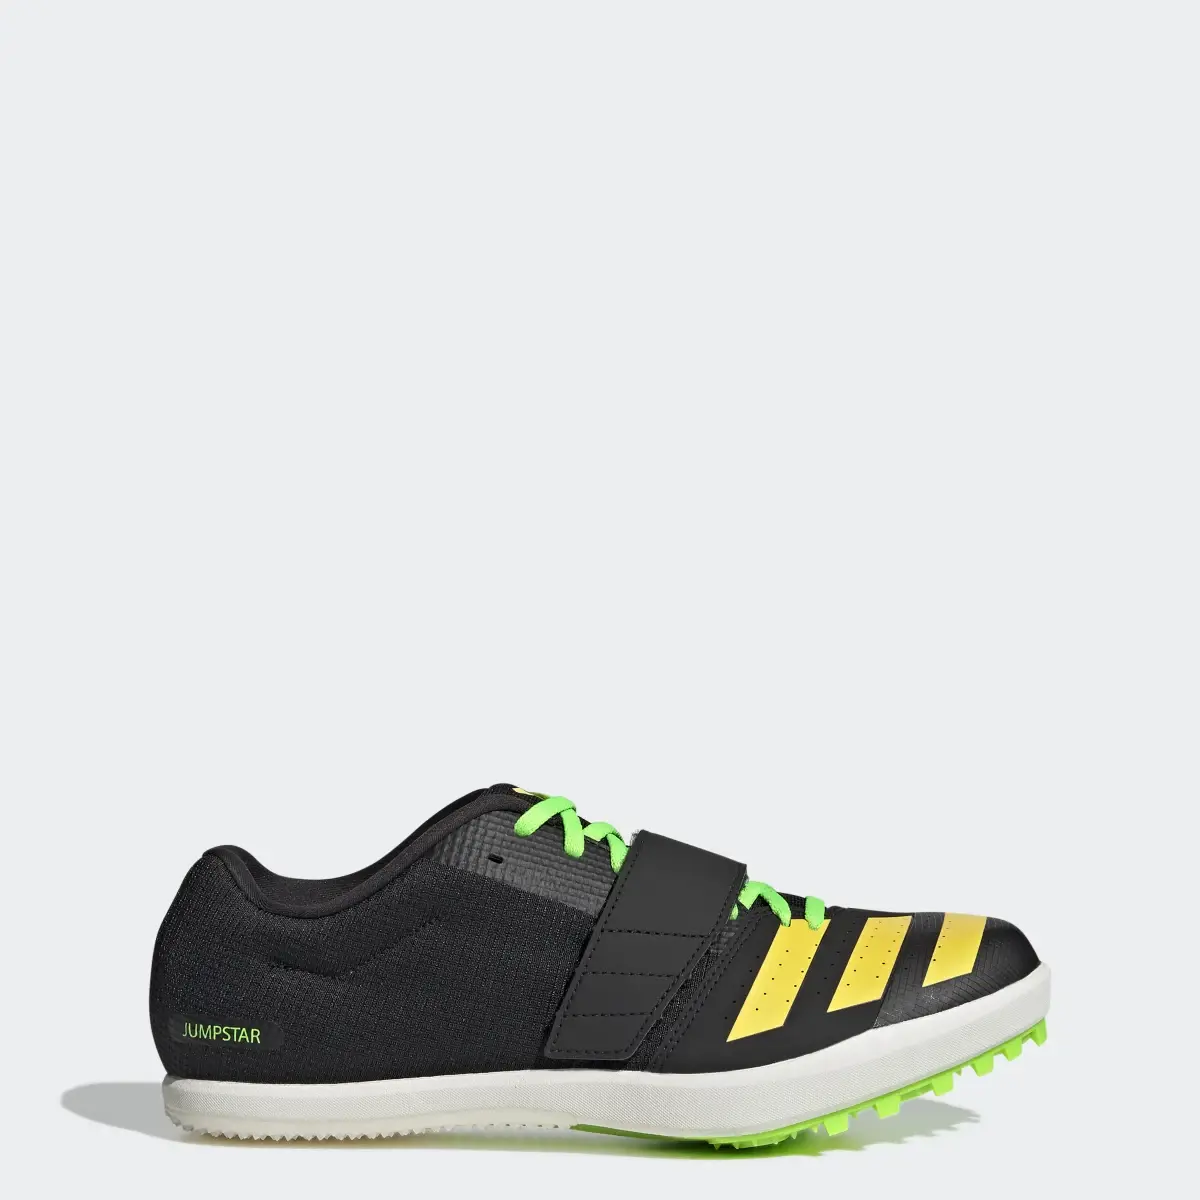 Adidas Jumpstar Spike-Schuh. 1